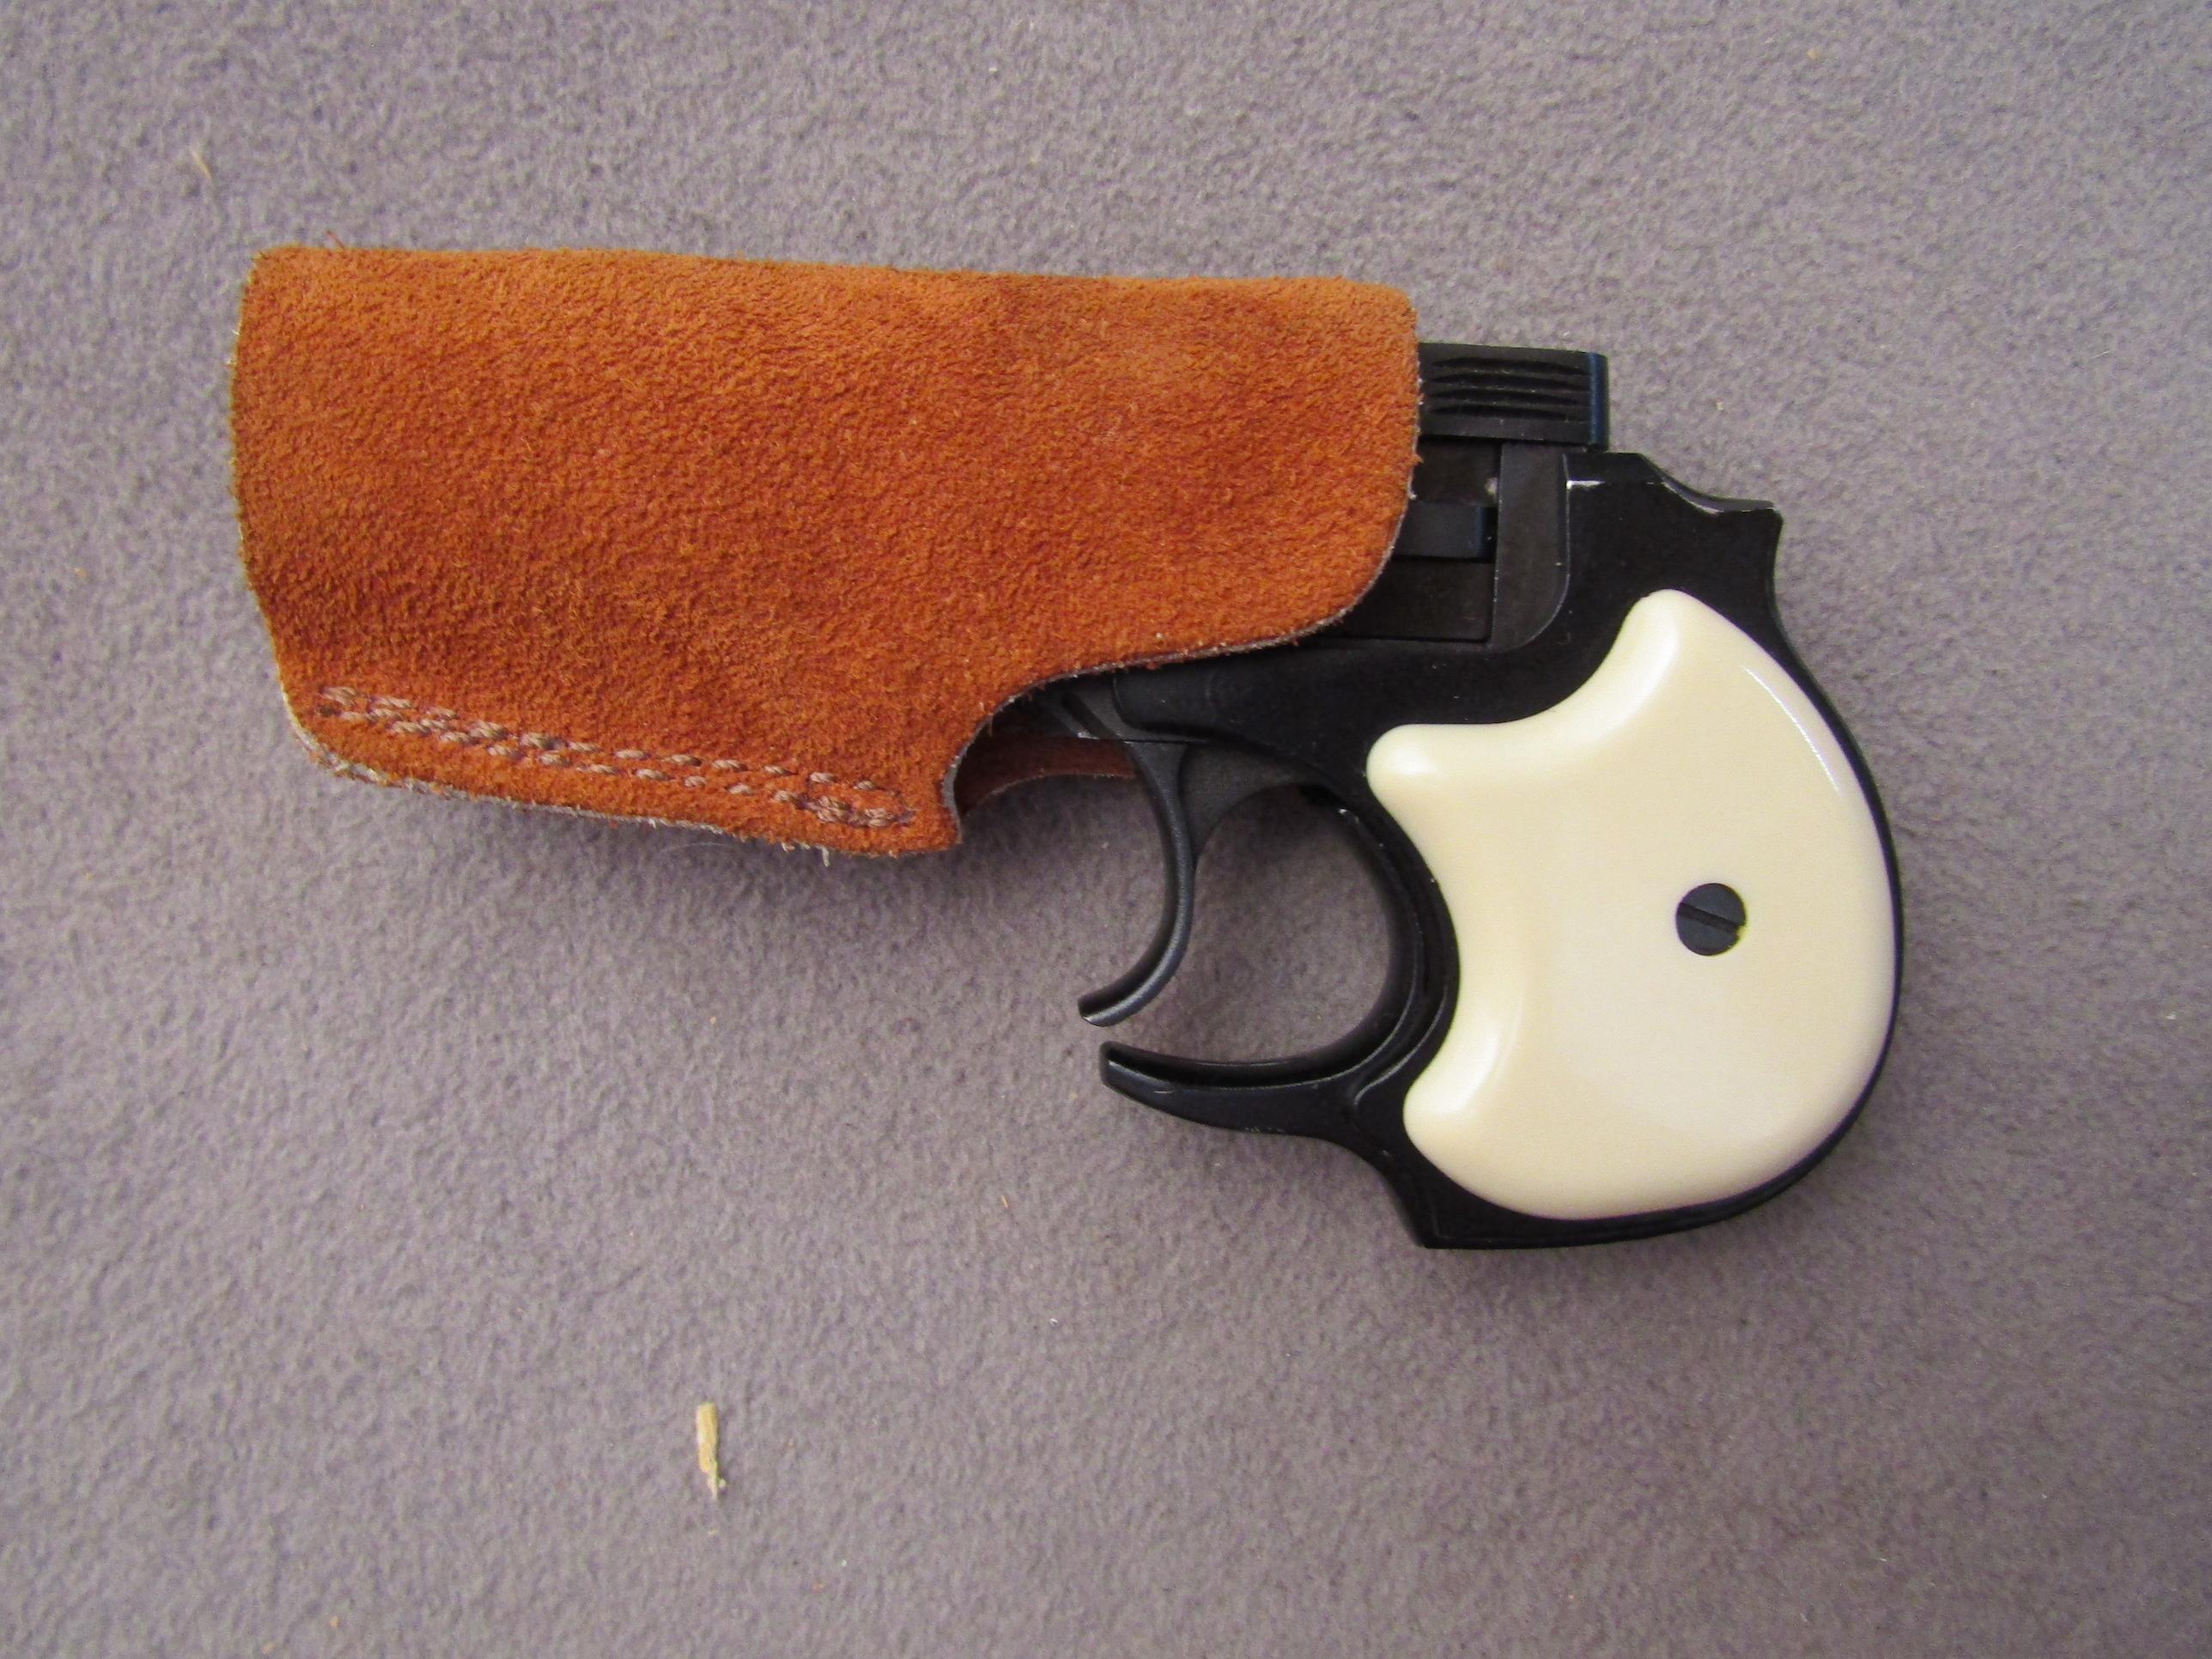 handgun: HIGH STANDARD Model Derringer, .22mag, 2 shot, 3.5" barrel, S#D89673